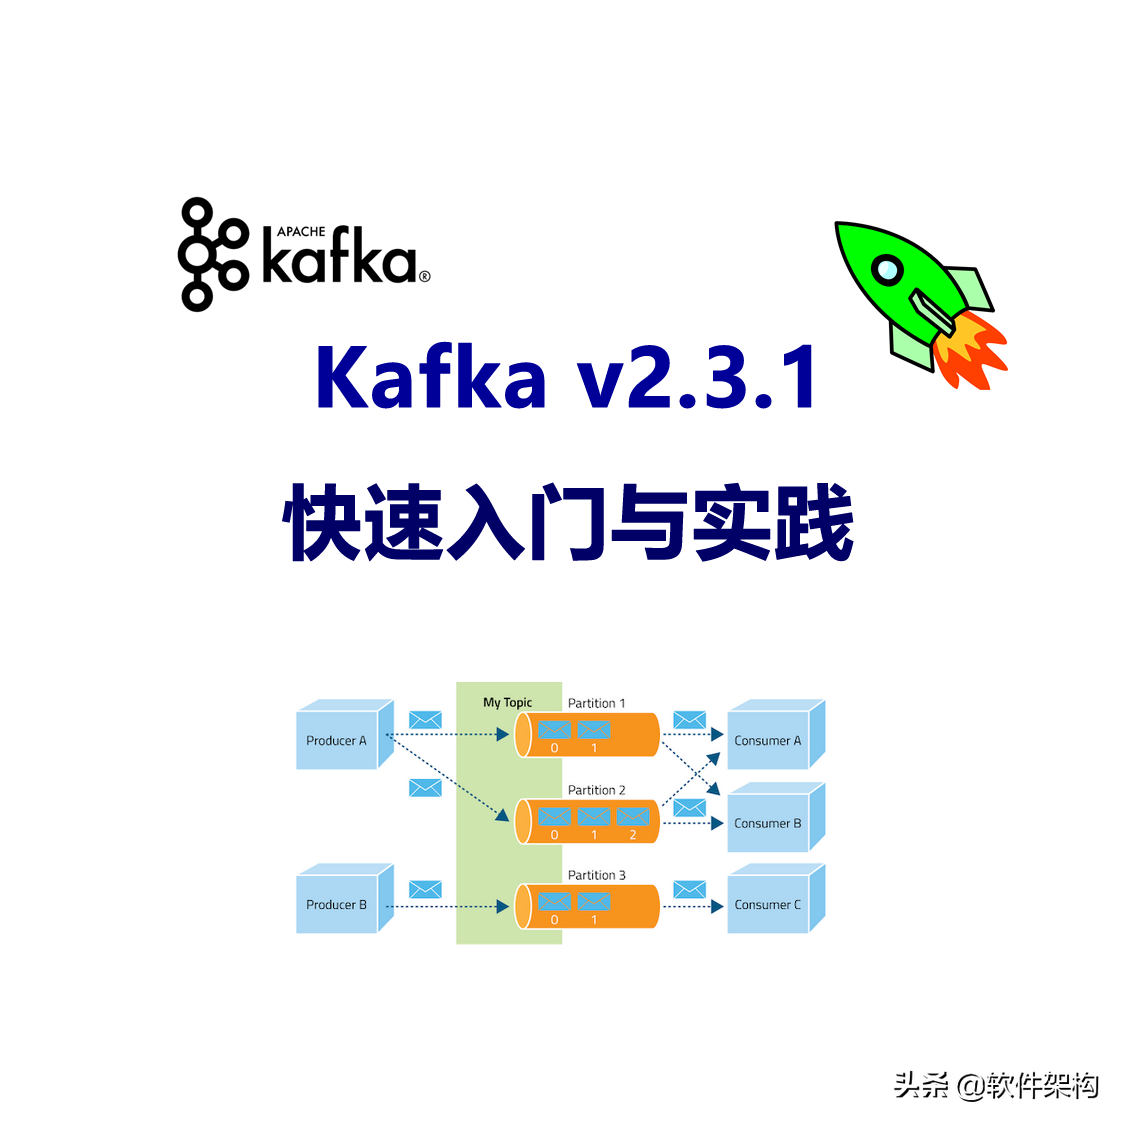 IDEA 安装和使用Kafka 可视化管理插件Kafkalytic